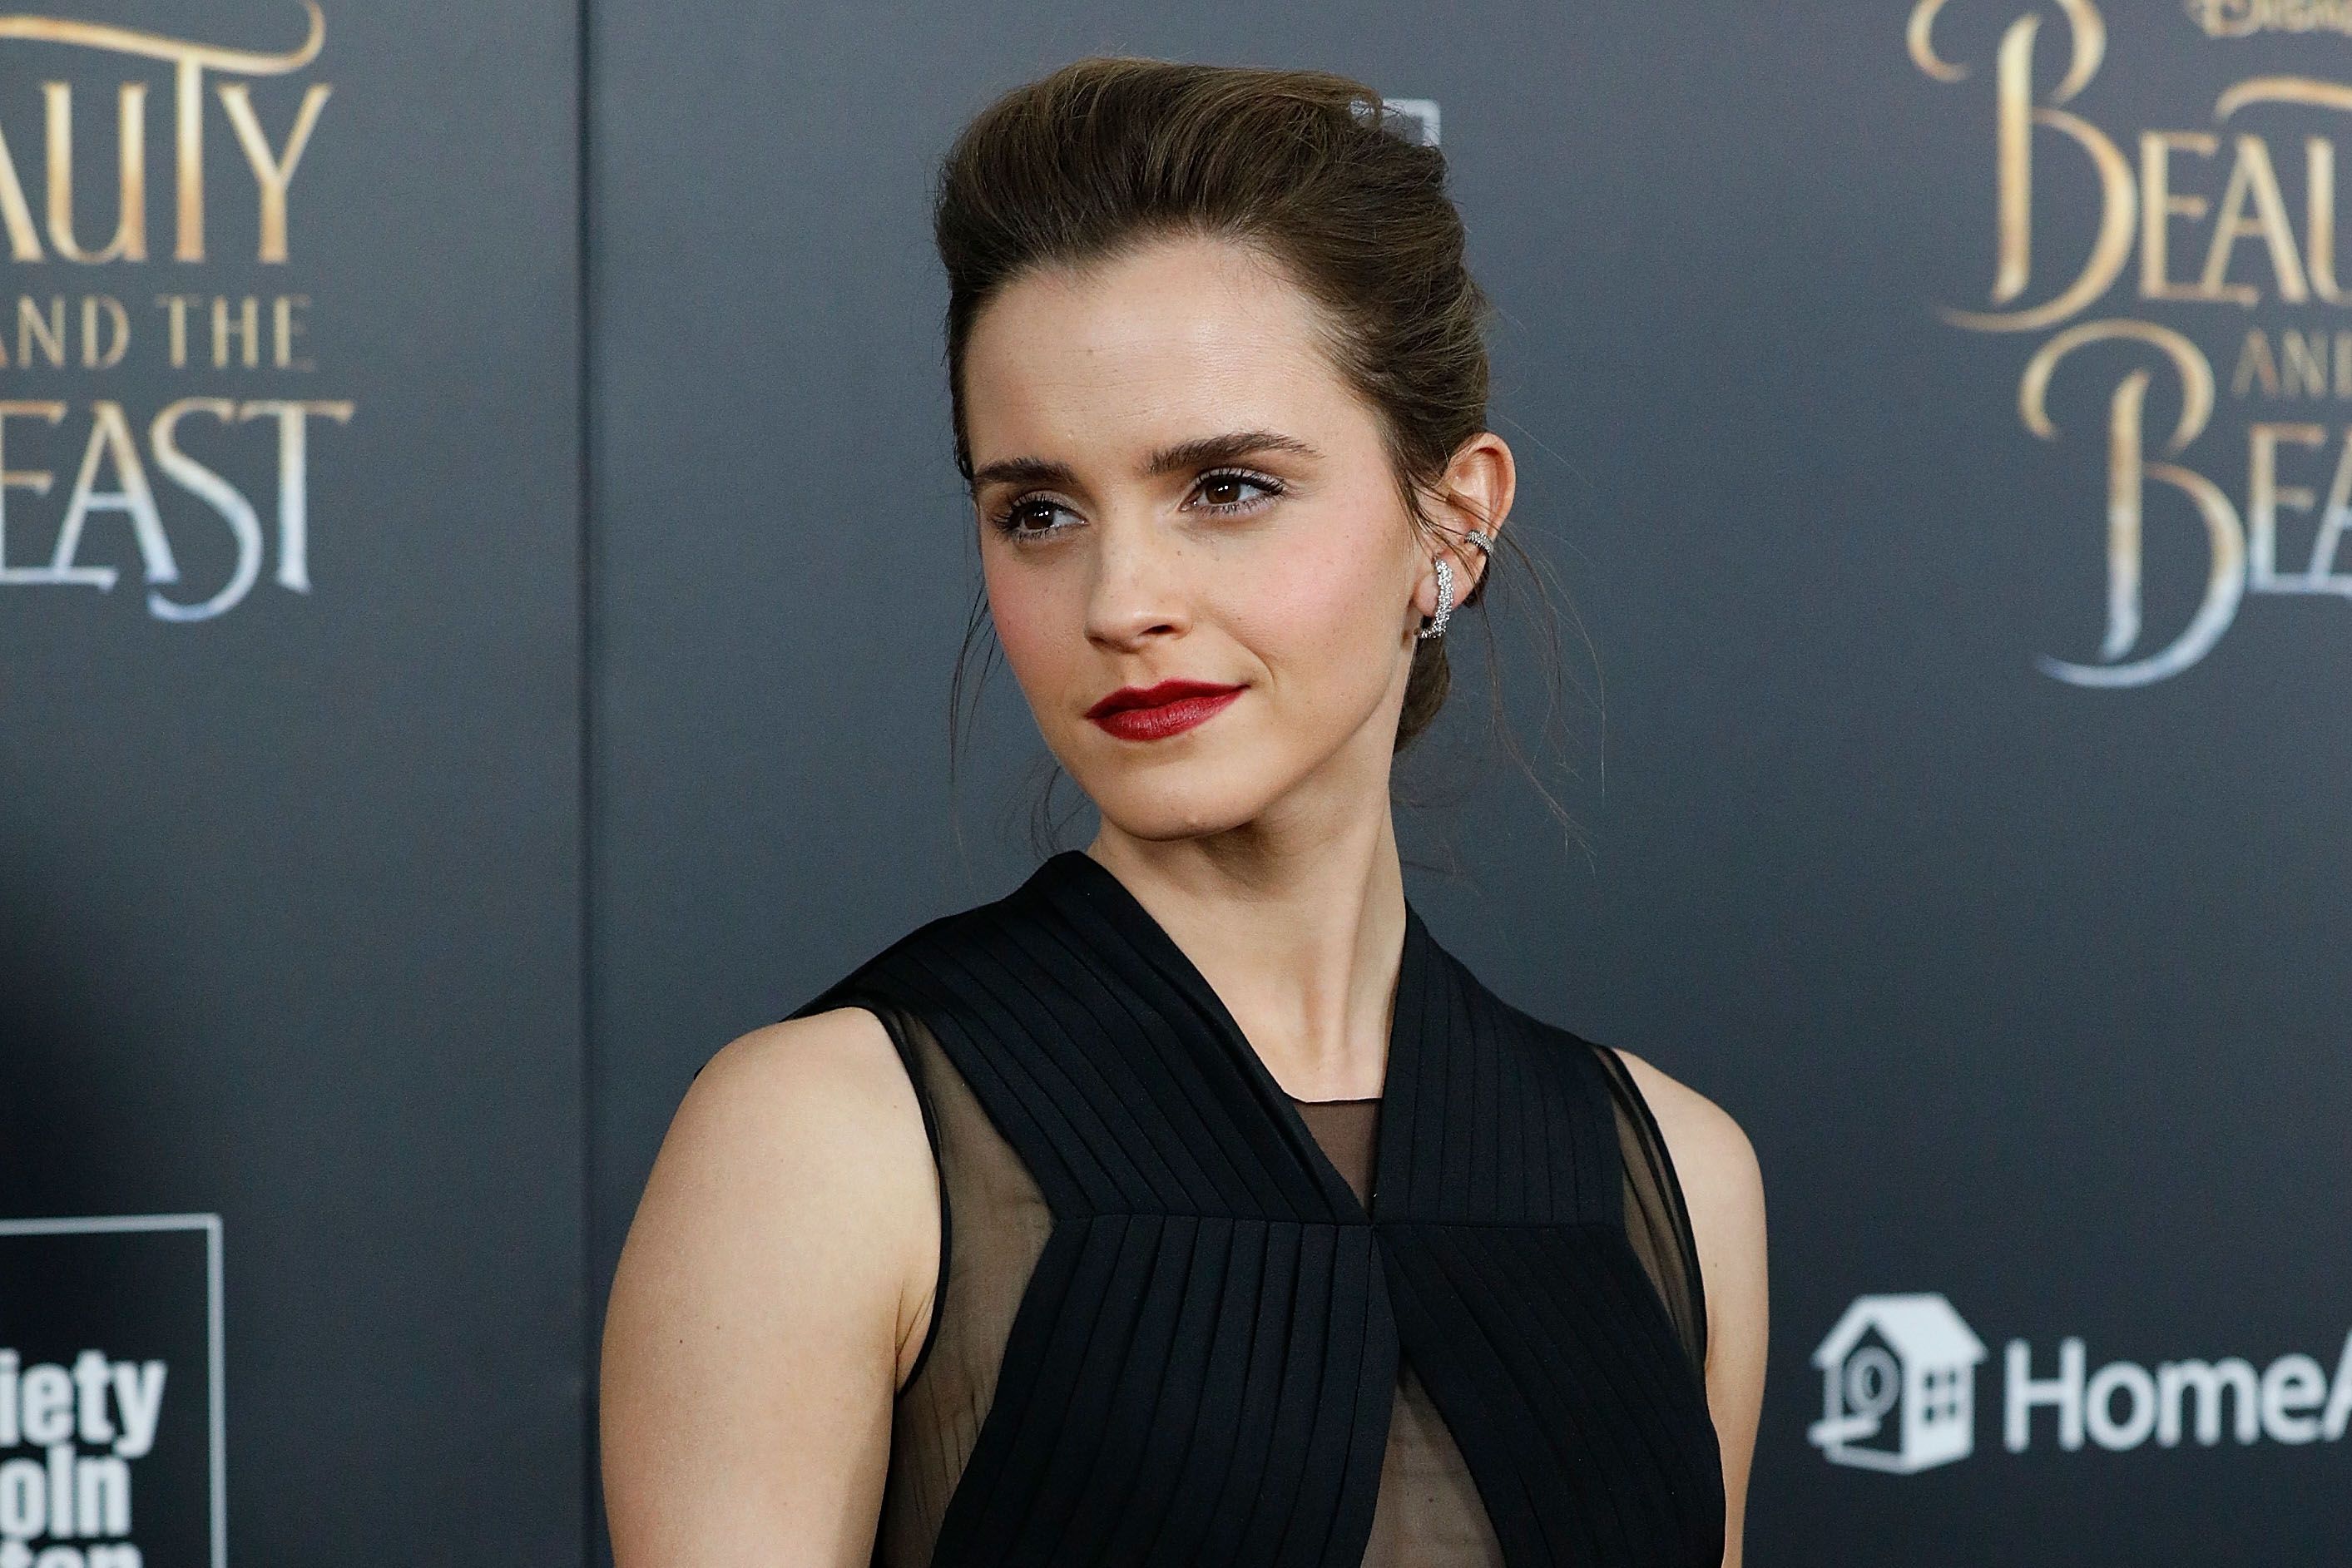 Emma Watson Sexxxx Videos - Emma Watson's Net Worth and 'Harry Potter' Earnings Will Shock You